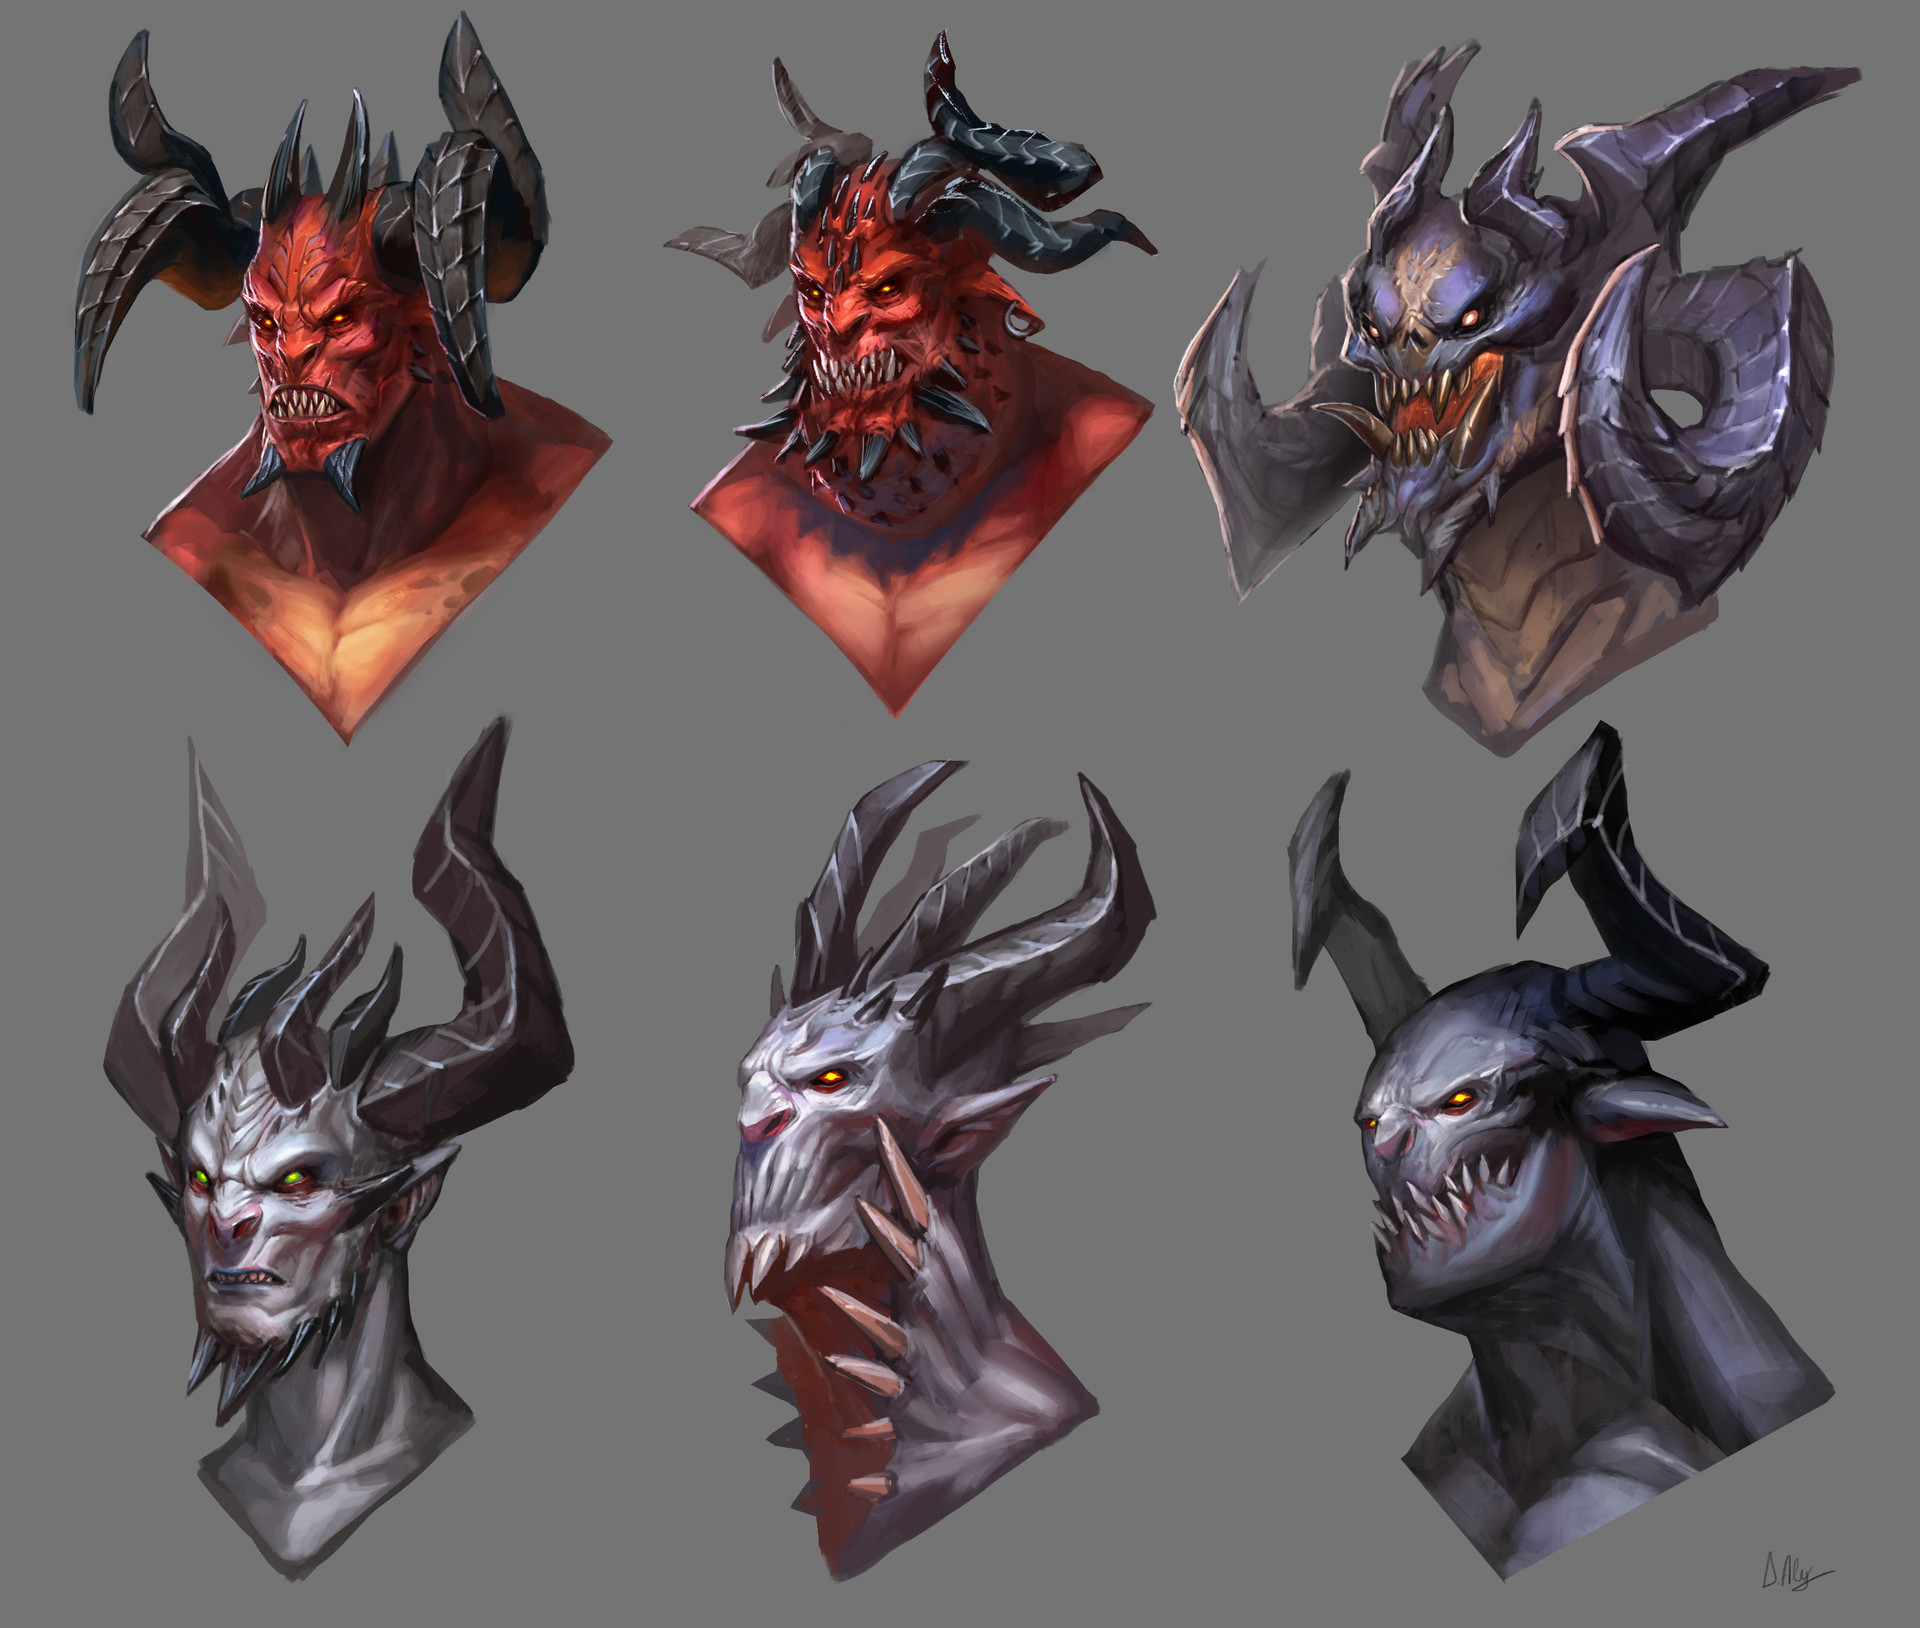 ArtStation - Demon heads